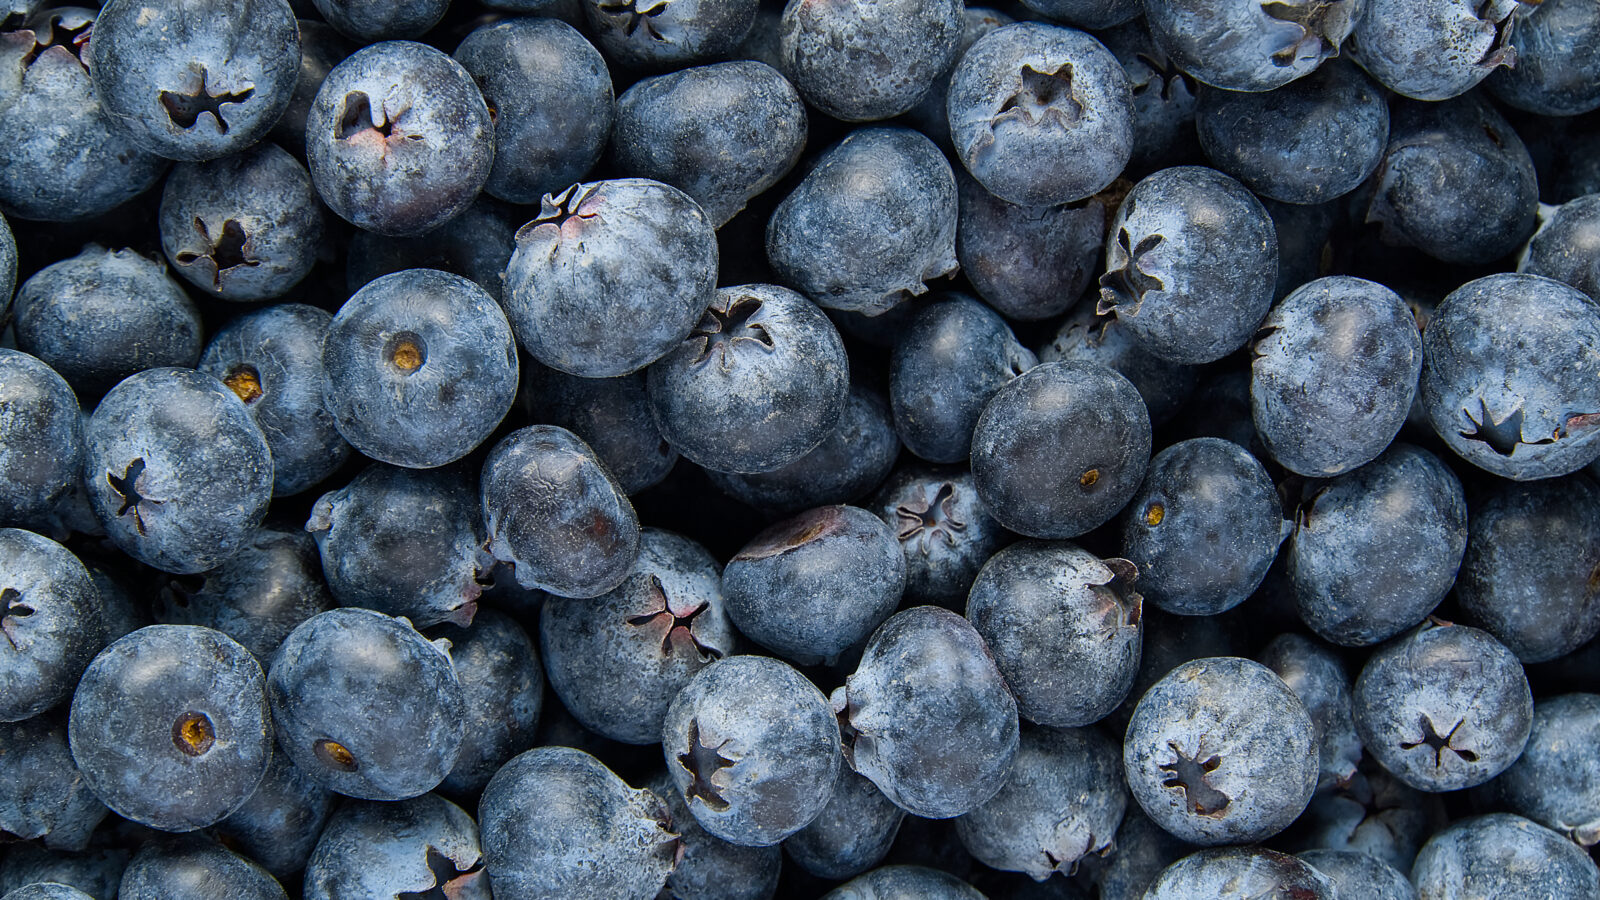 Organic blueberry background. Fresh Bilberries. Close-up background. Background from freshly picked blueberries